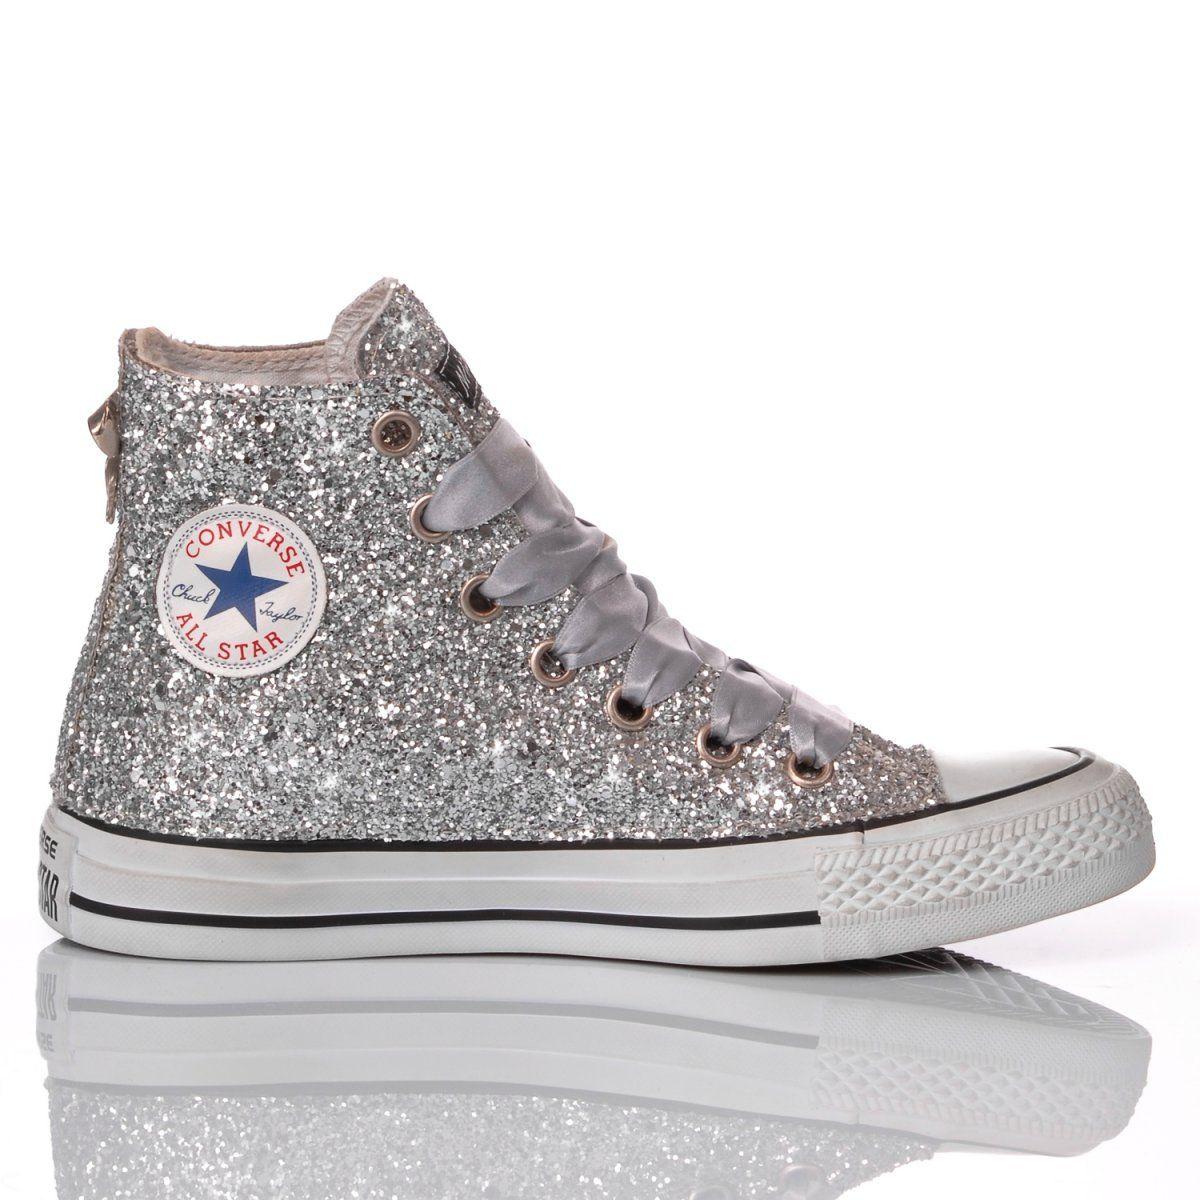 Converse Glitter Hi Top Sneakers in Silver (Metallic) - Save 29% | Lyst